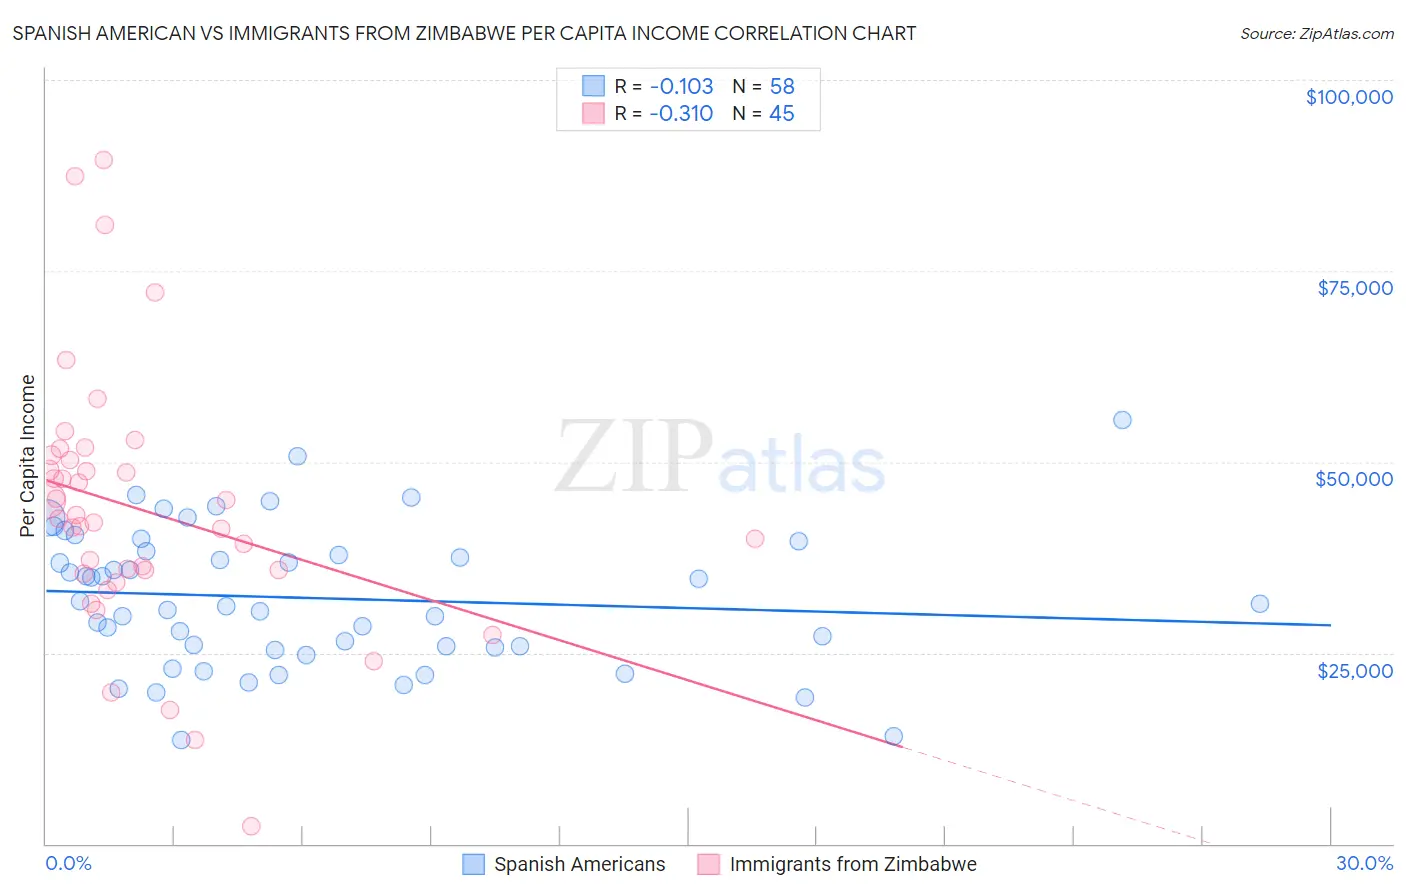 Spanish American vs Immigrants from Zimbabwe Per Capita Income